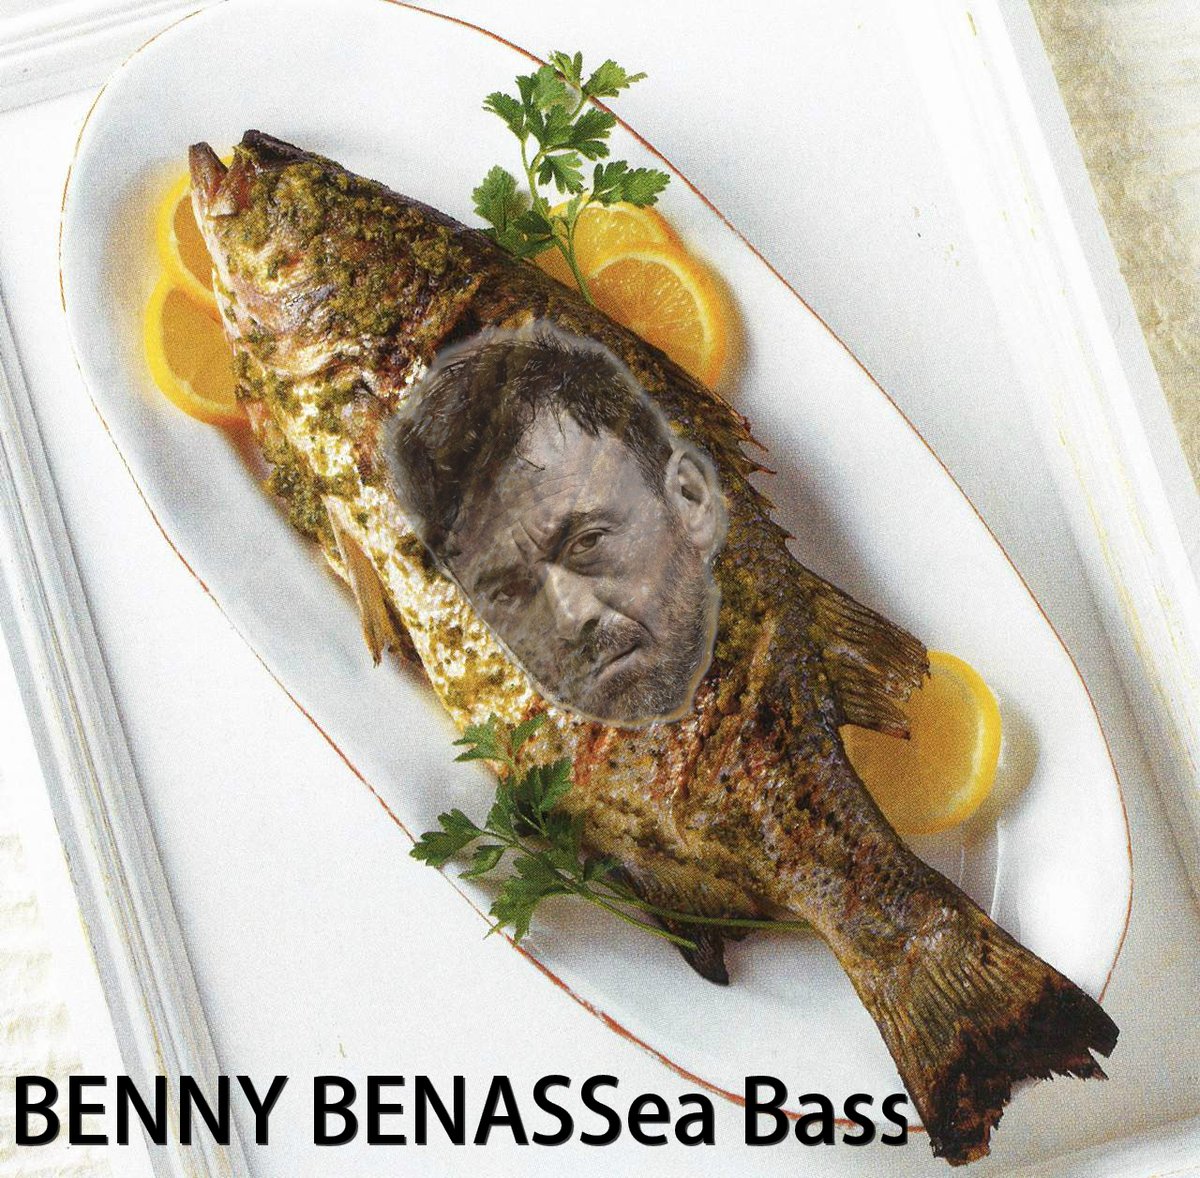 Benny Benassea Bass